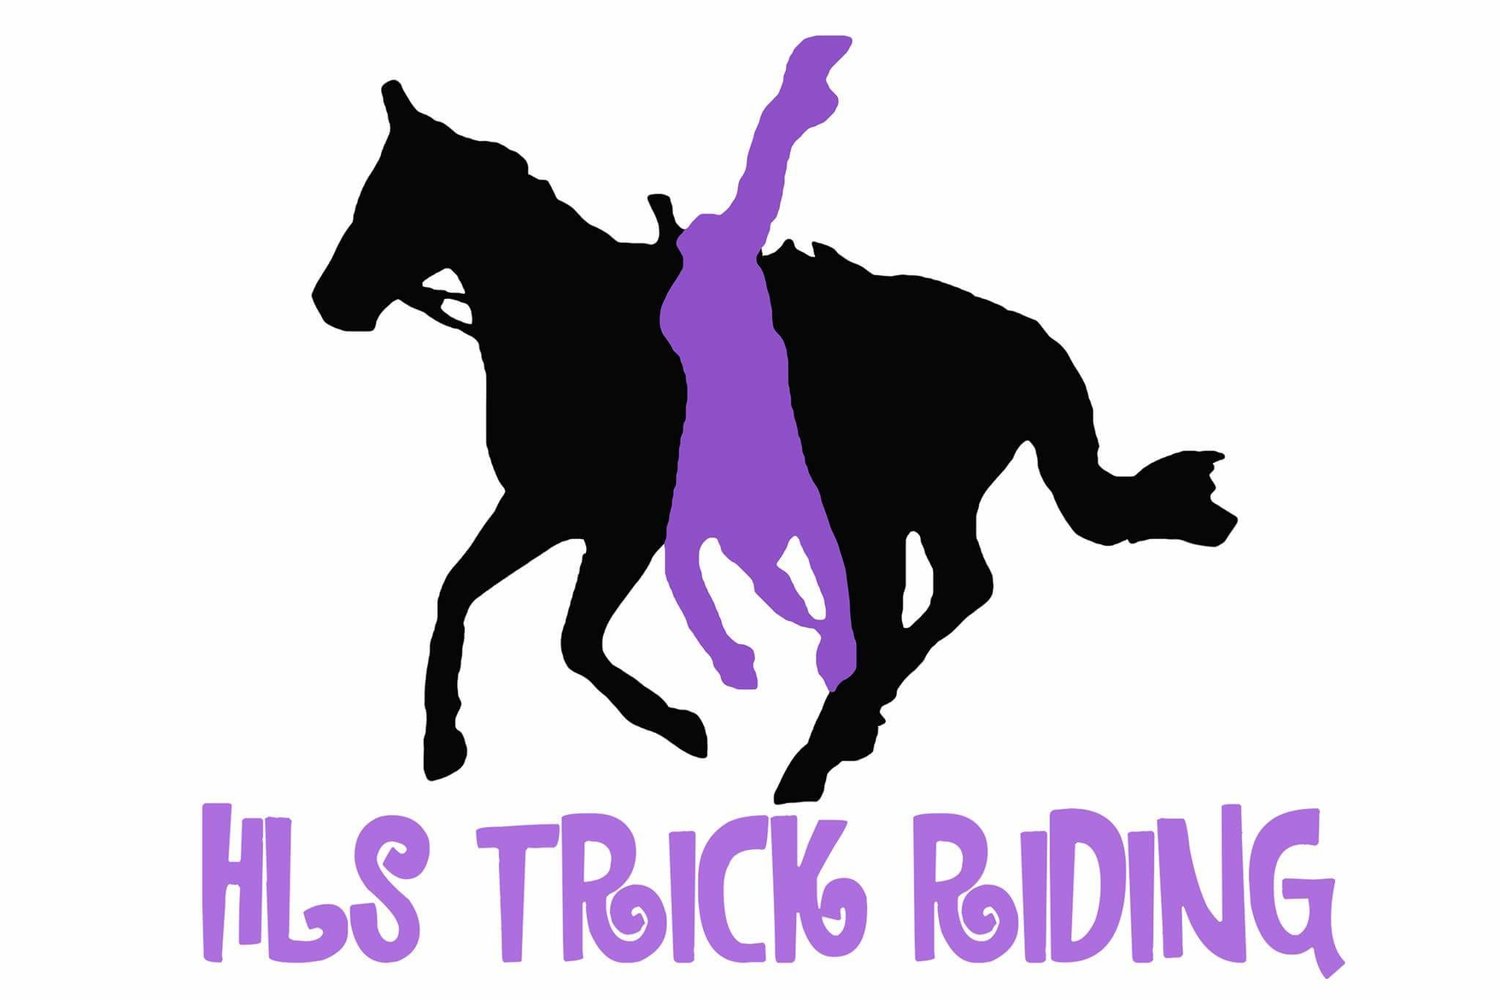 HLS Trick Riding & equestrian services